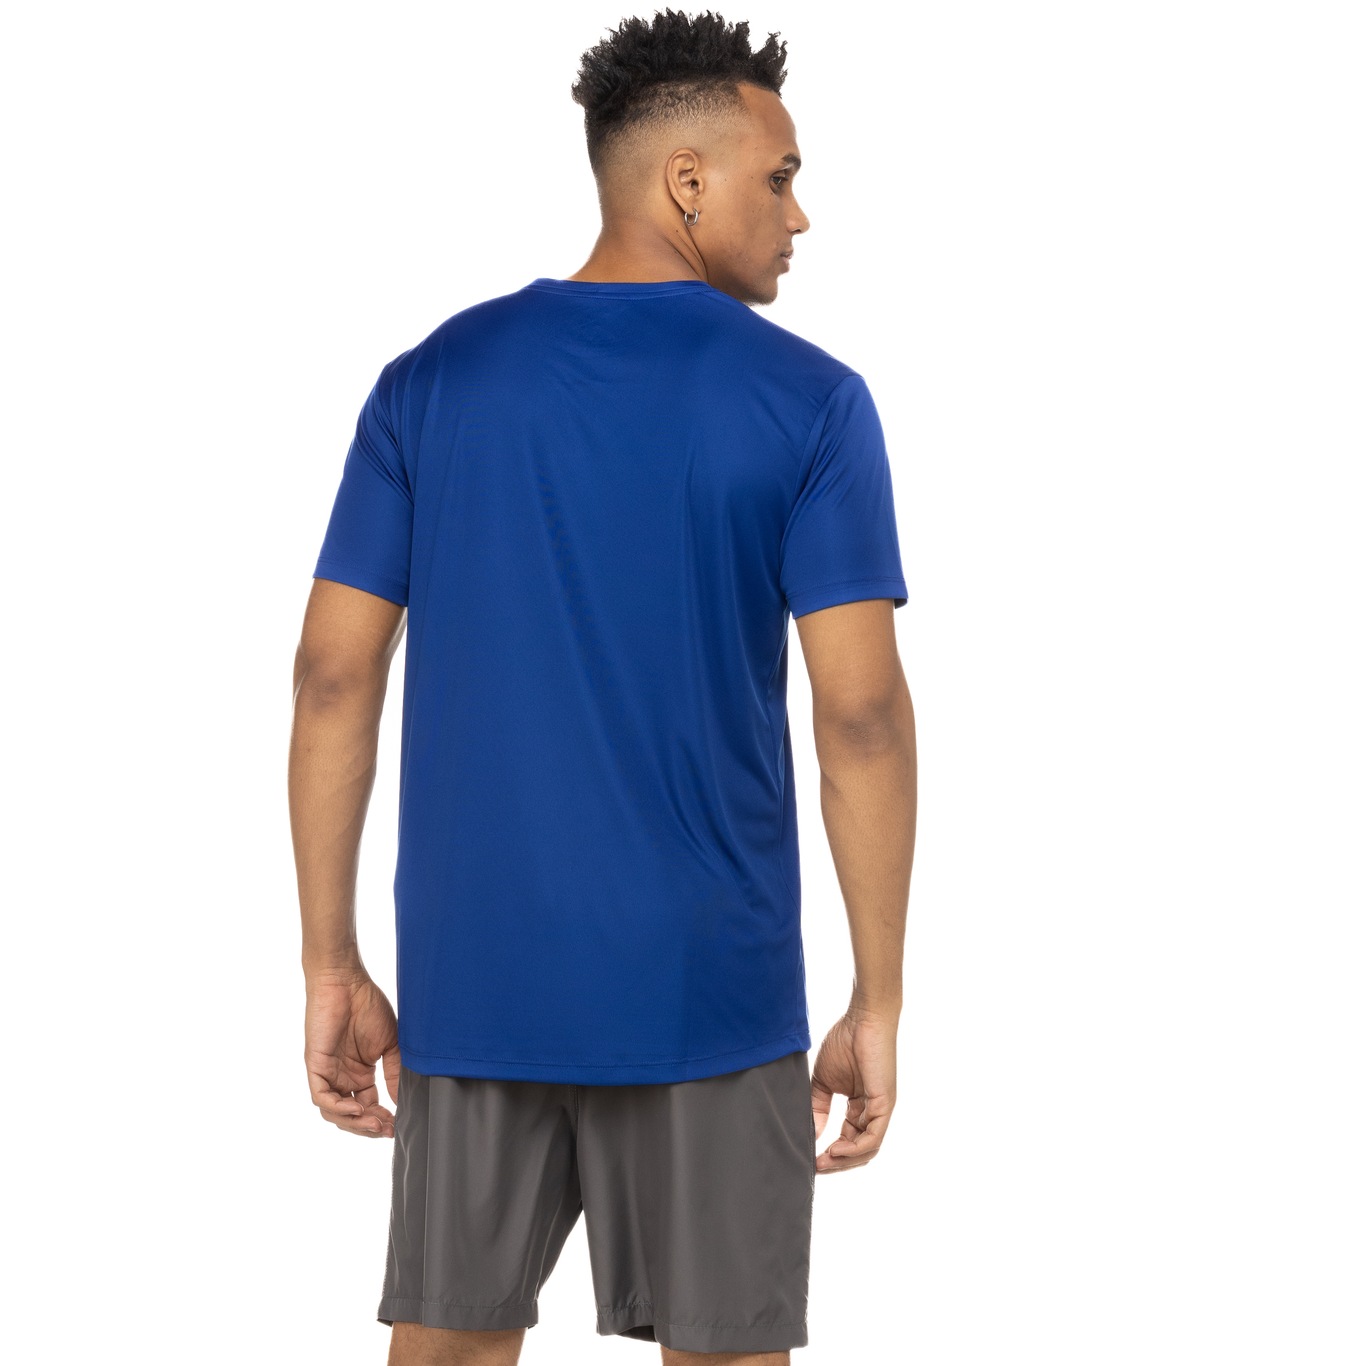 Camiseta Oakley Daily Sport III Masculina - Chumbo